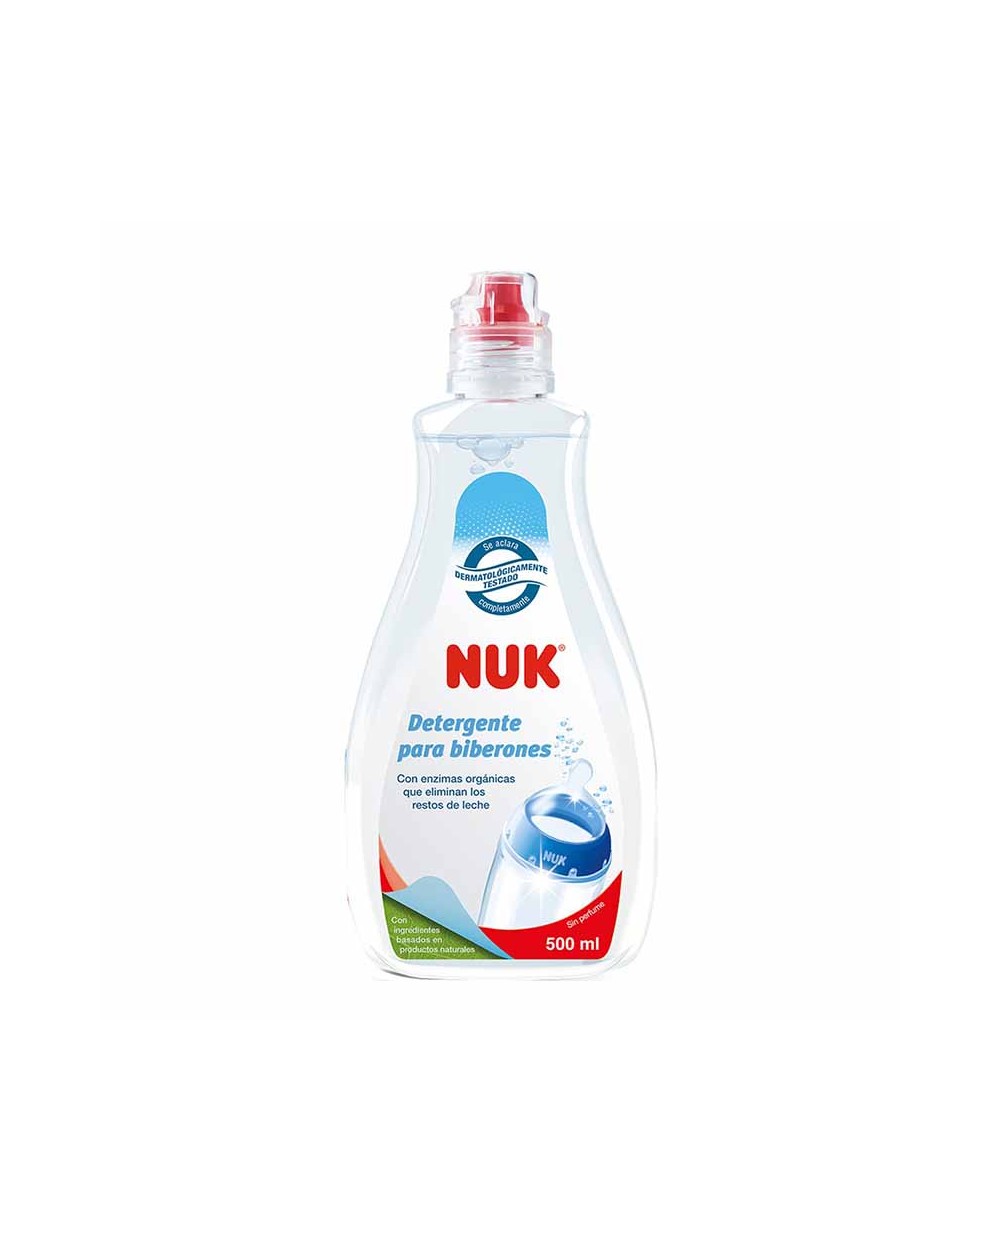 Detergente Nuk para biberones con ingredientes naturales - 500ml.